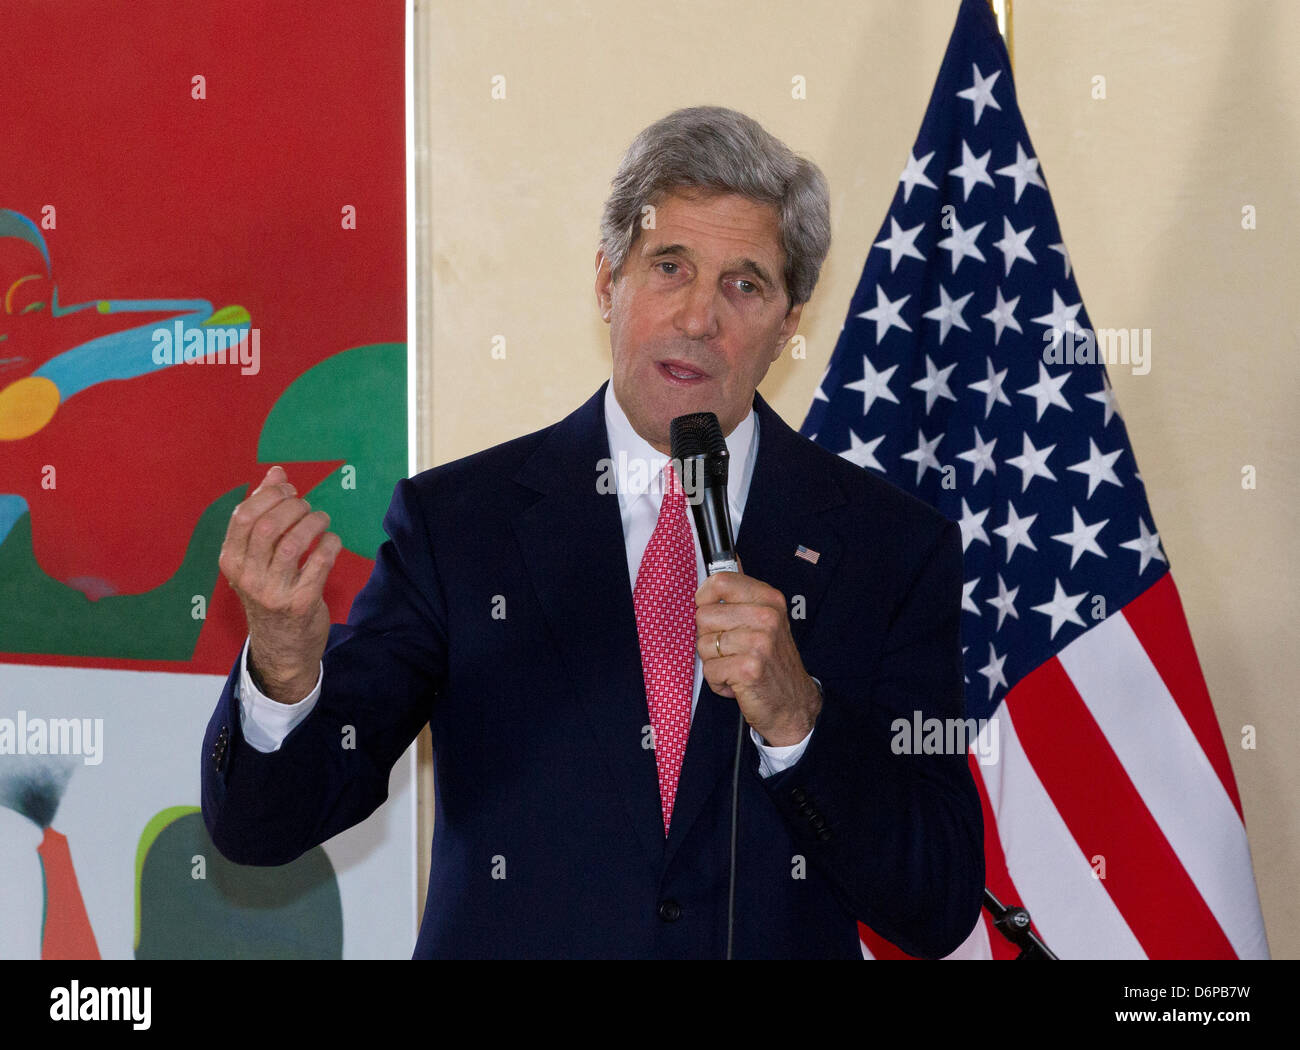 John Kerry, former Secretary of State, United States US Stock Photo